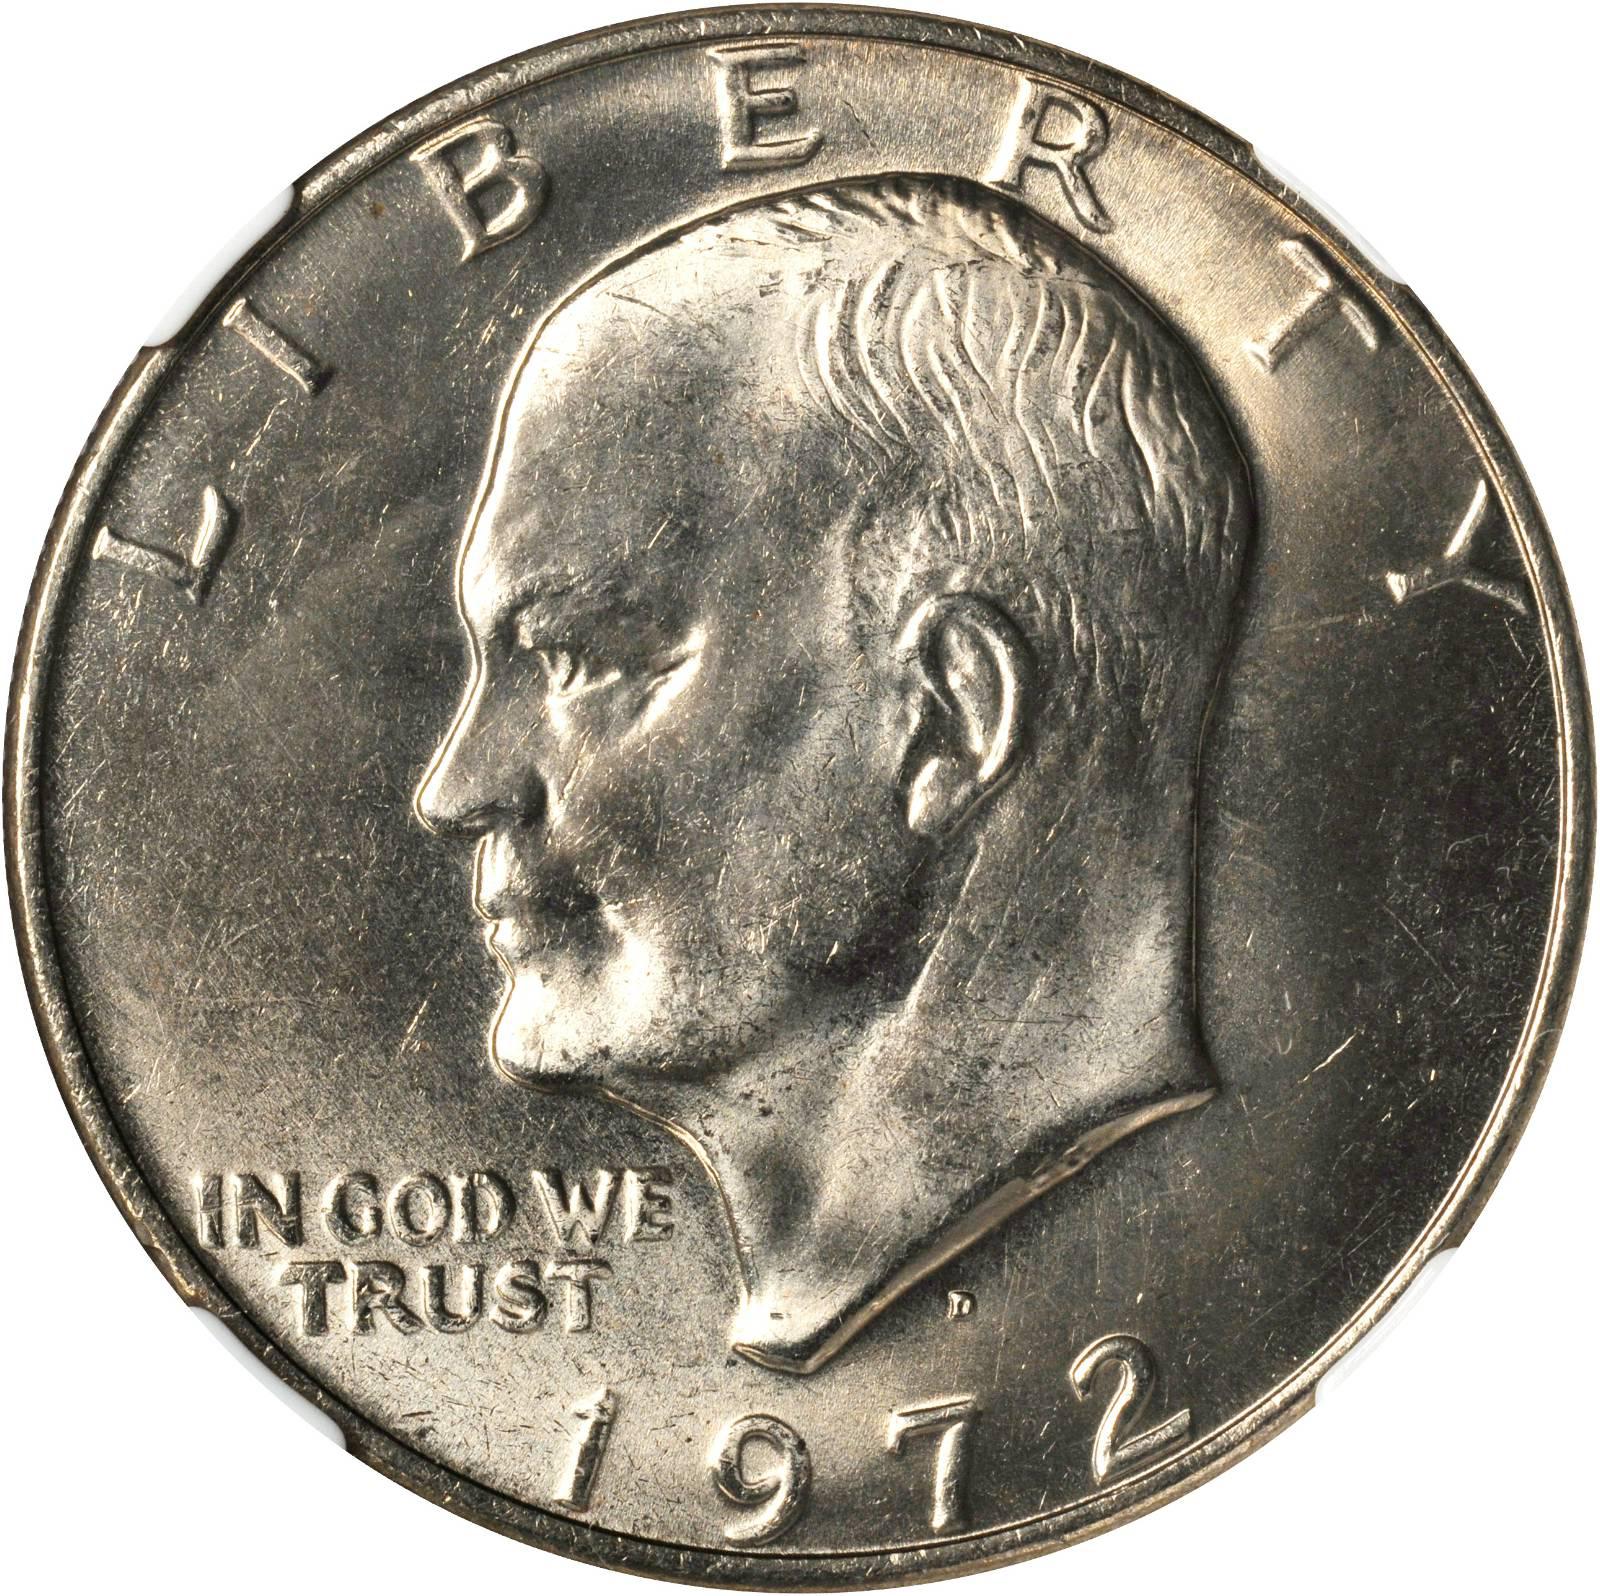 Value Of 1972 D Eisenhower Dollar Sell Modern Coins,Virginia Creeper Five Leaf Plant Identification